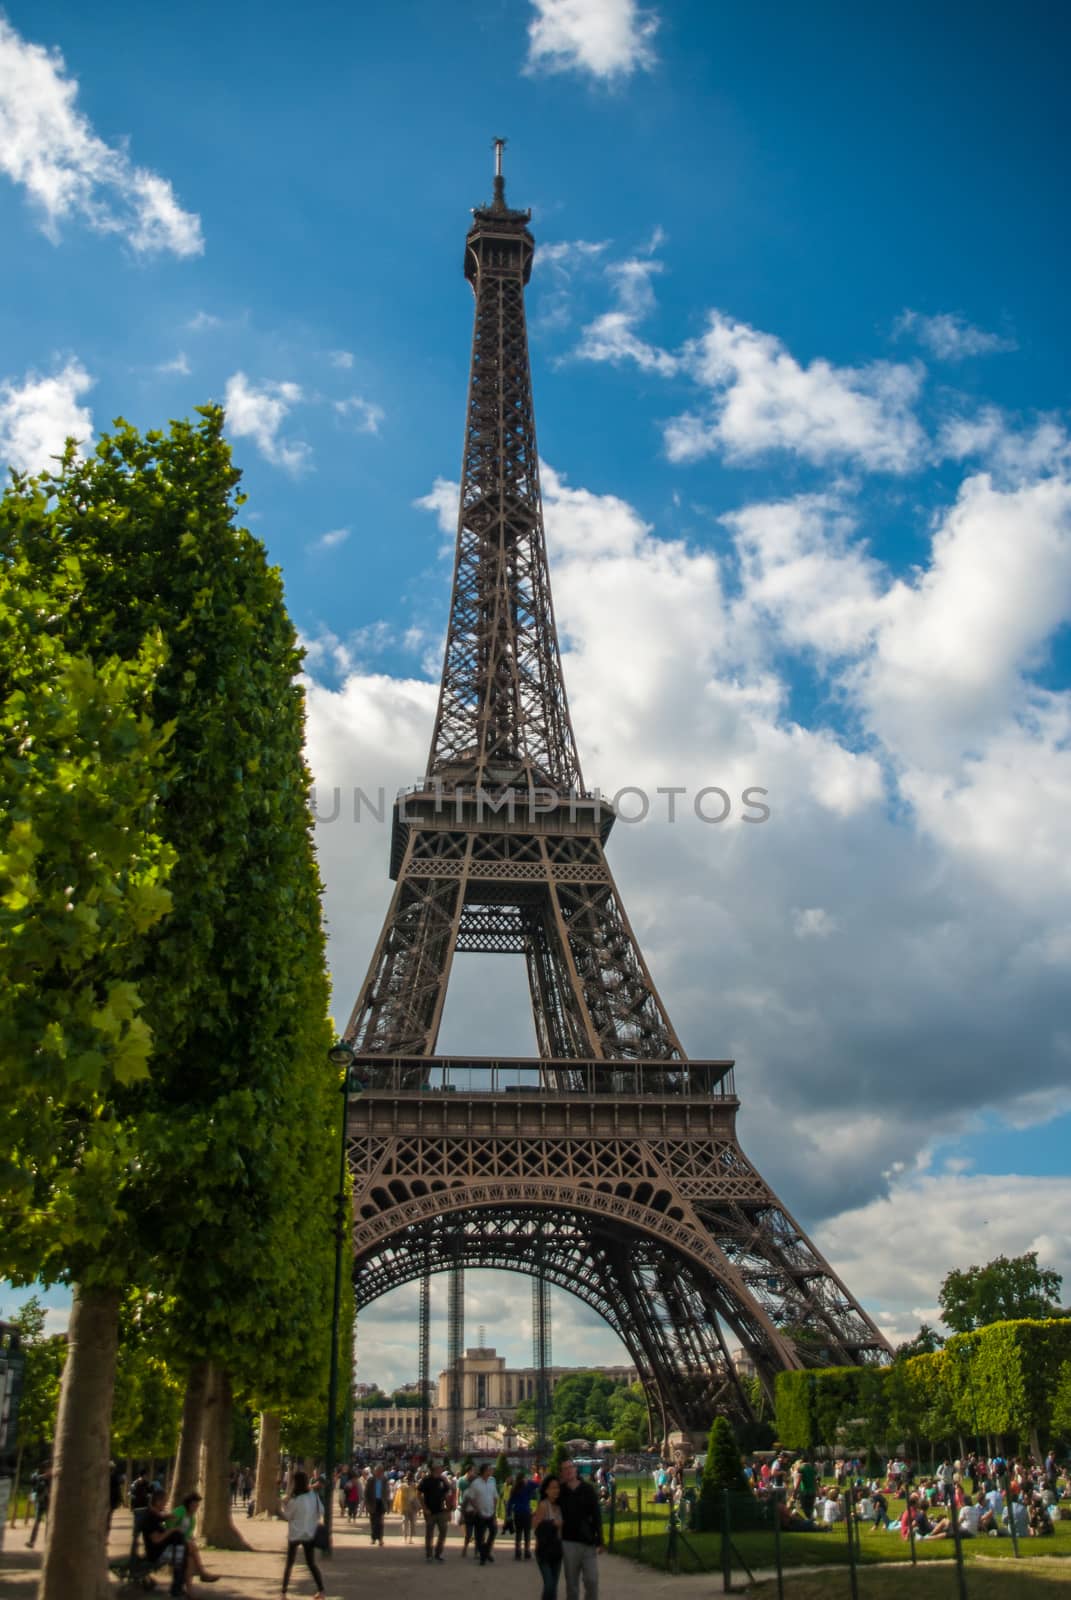 Park in front of Eiffel Tower Tour Eiffel blue sky clouds